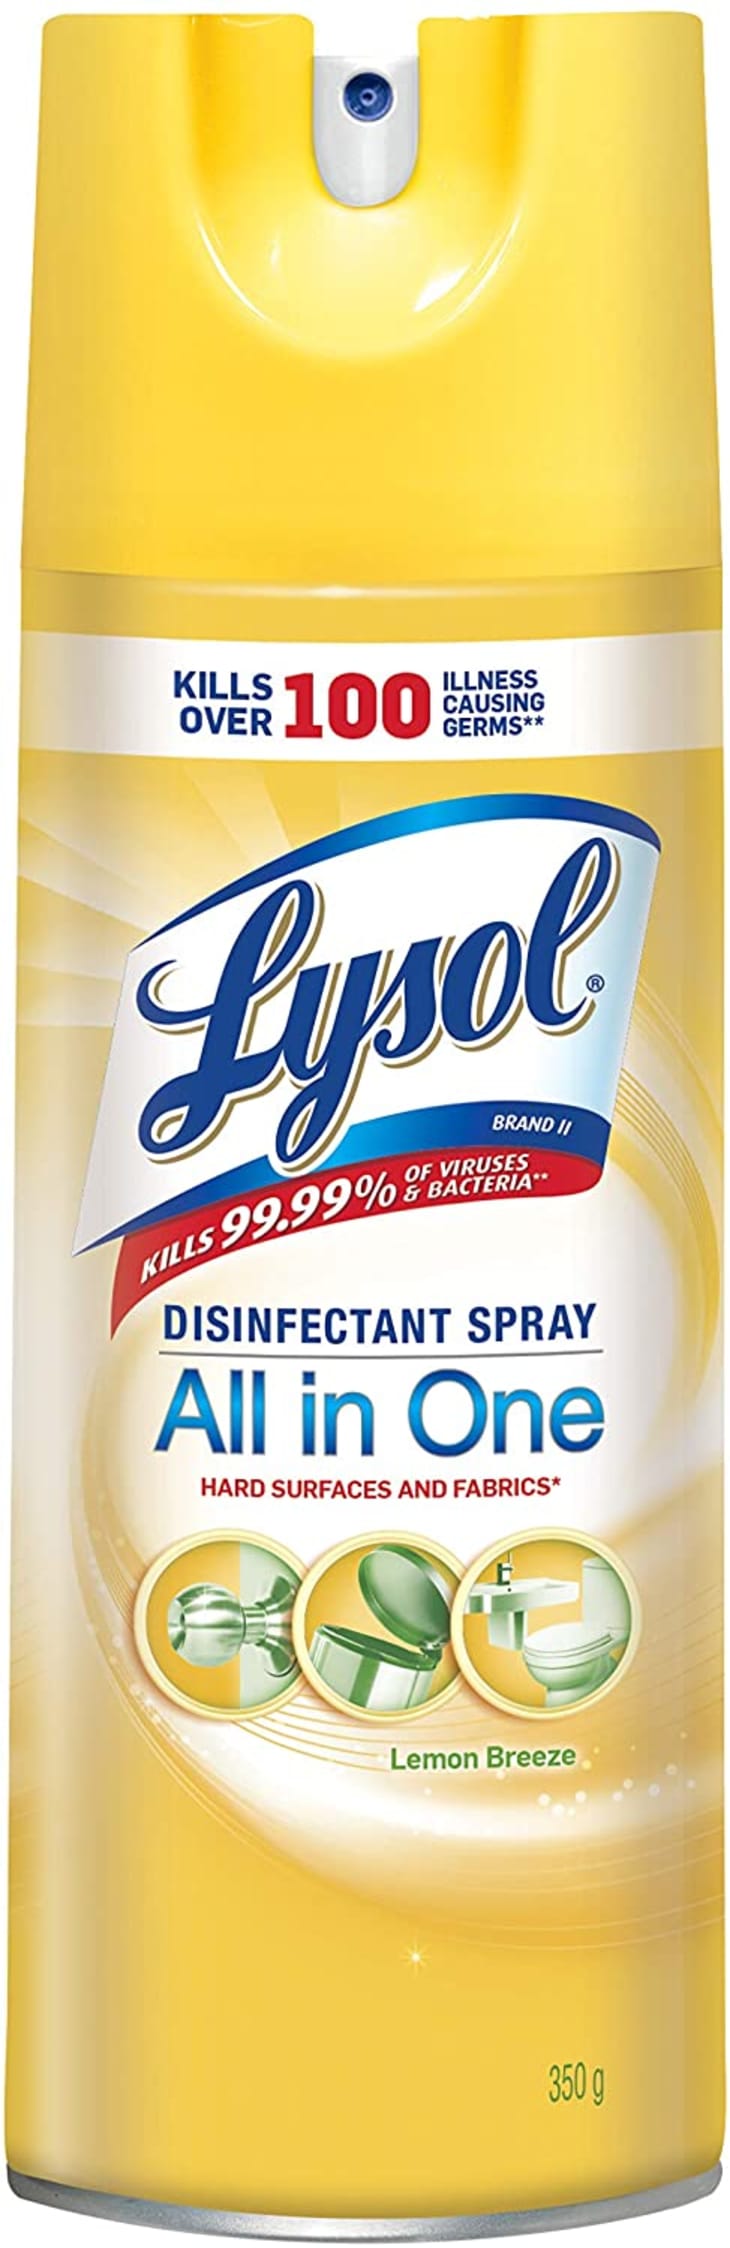 Lysol Disinfectant Spray, Lemon Breeze at Amazon